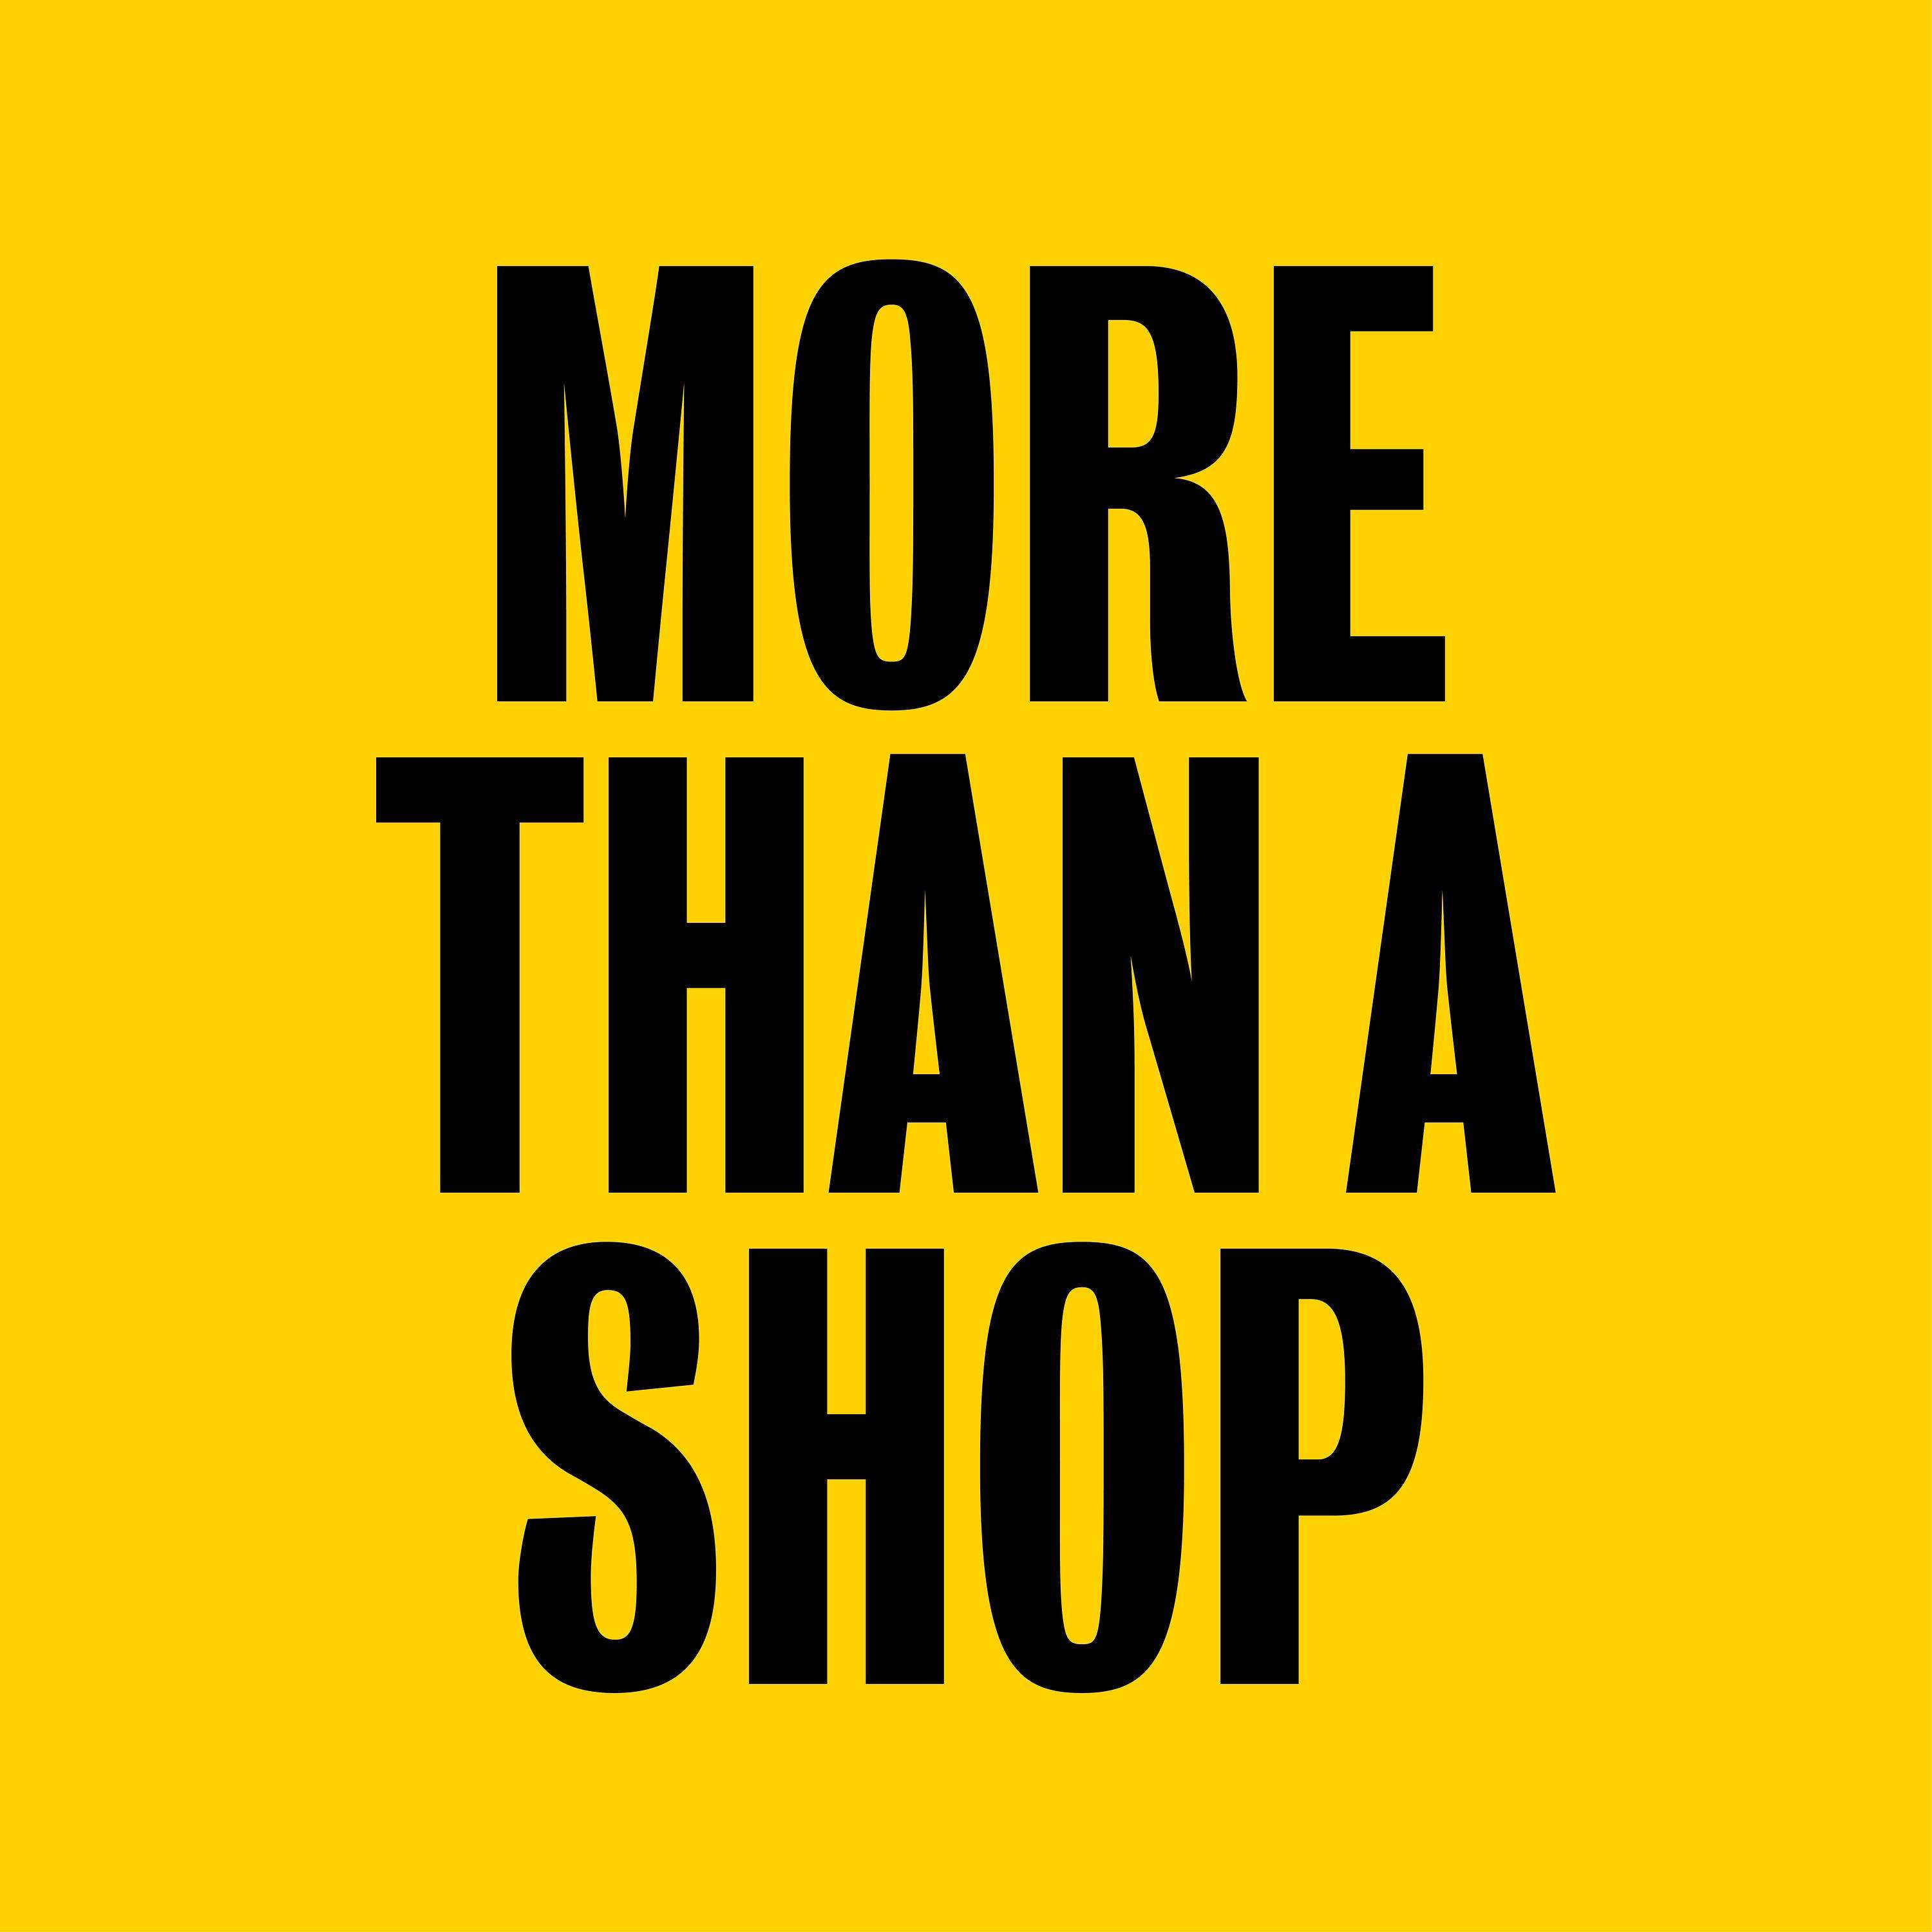 More Than a Shop [Trailer]